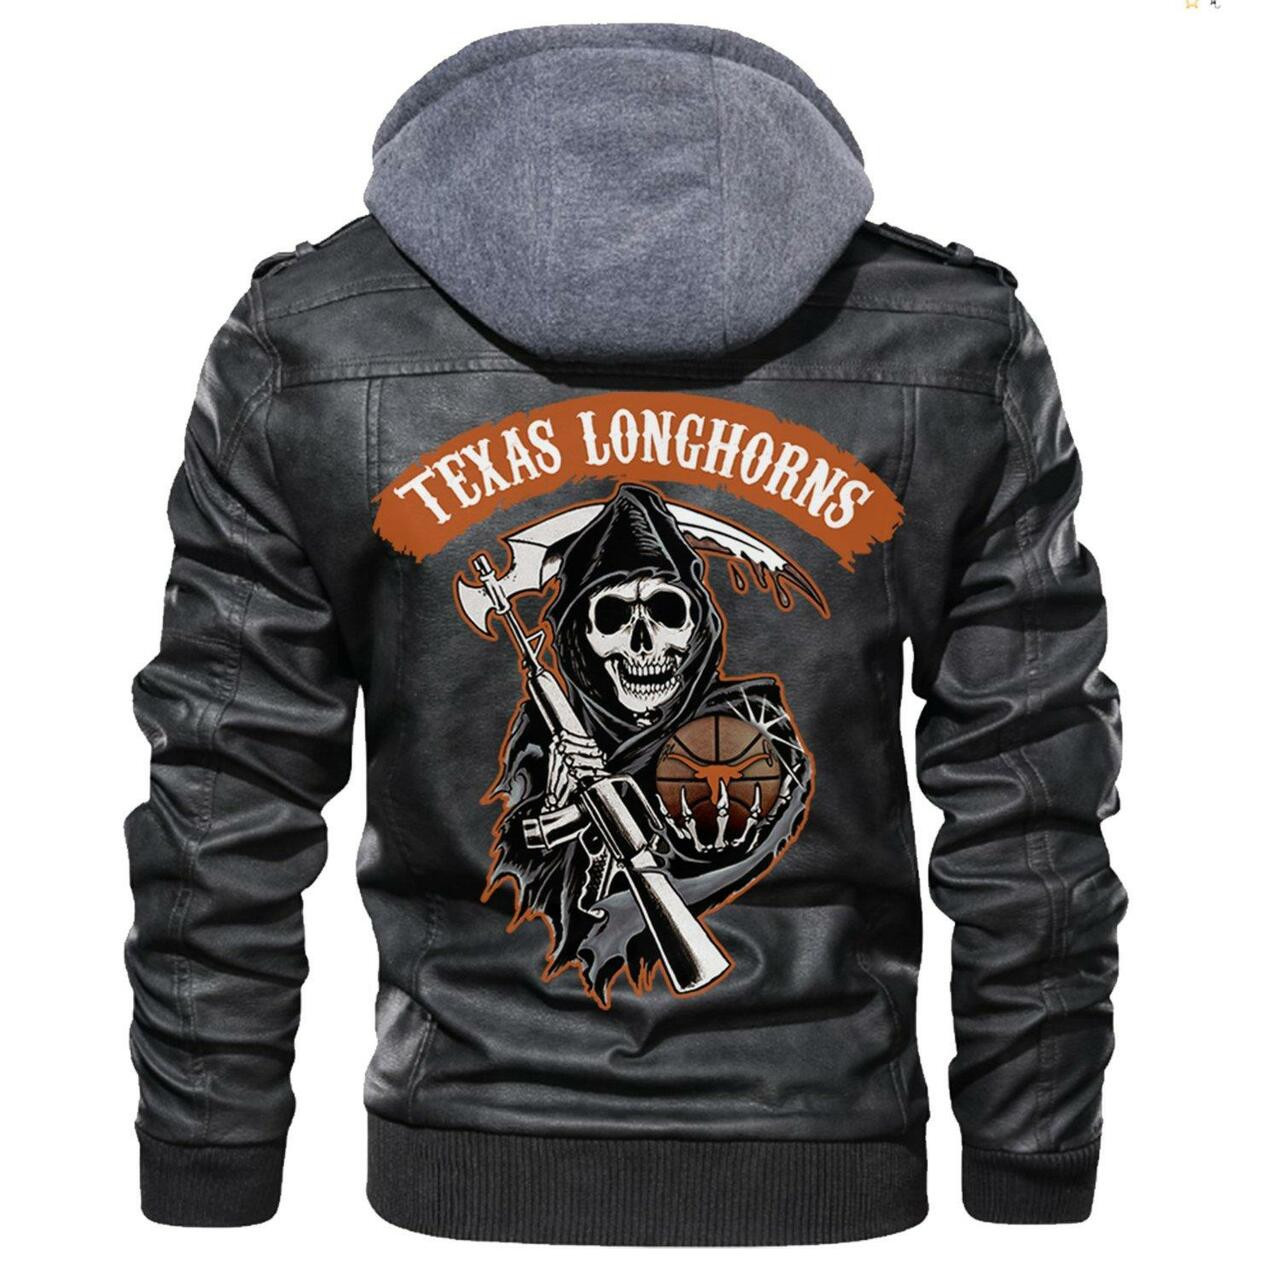 Top leather jacket Sells Best on Techcomshop 48